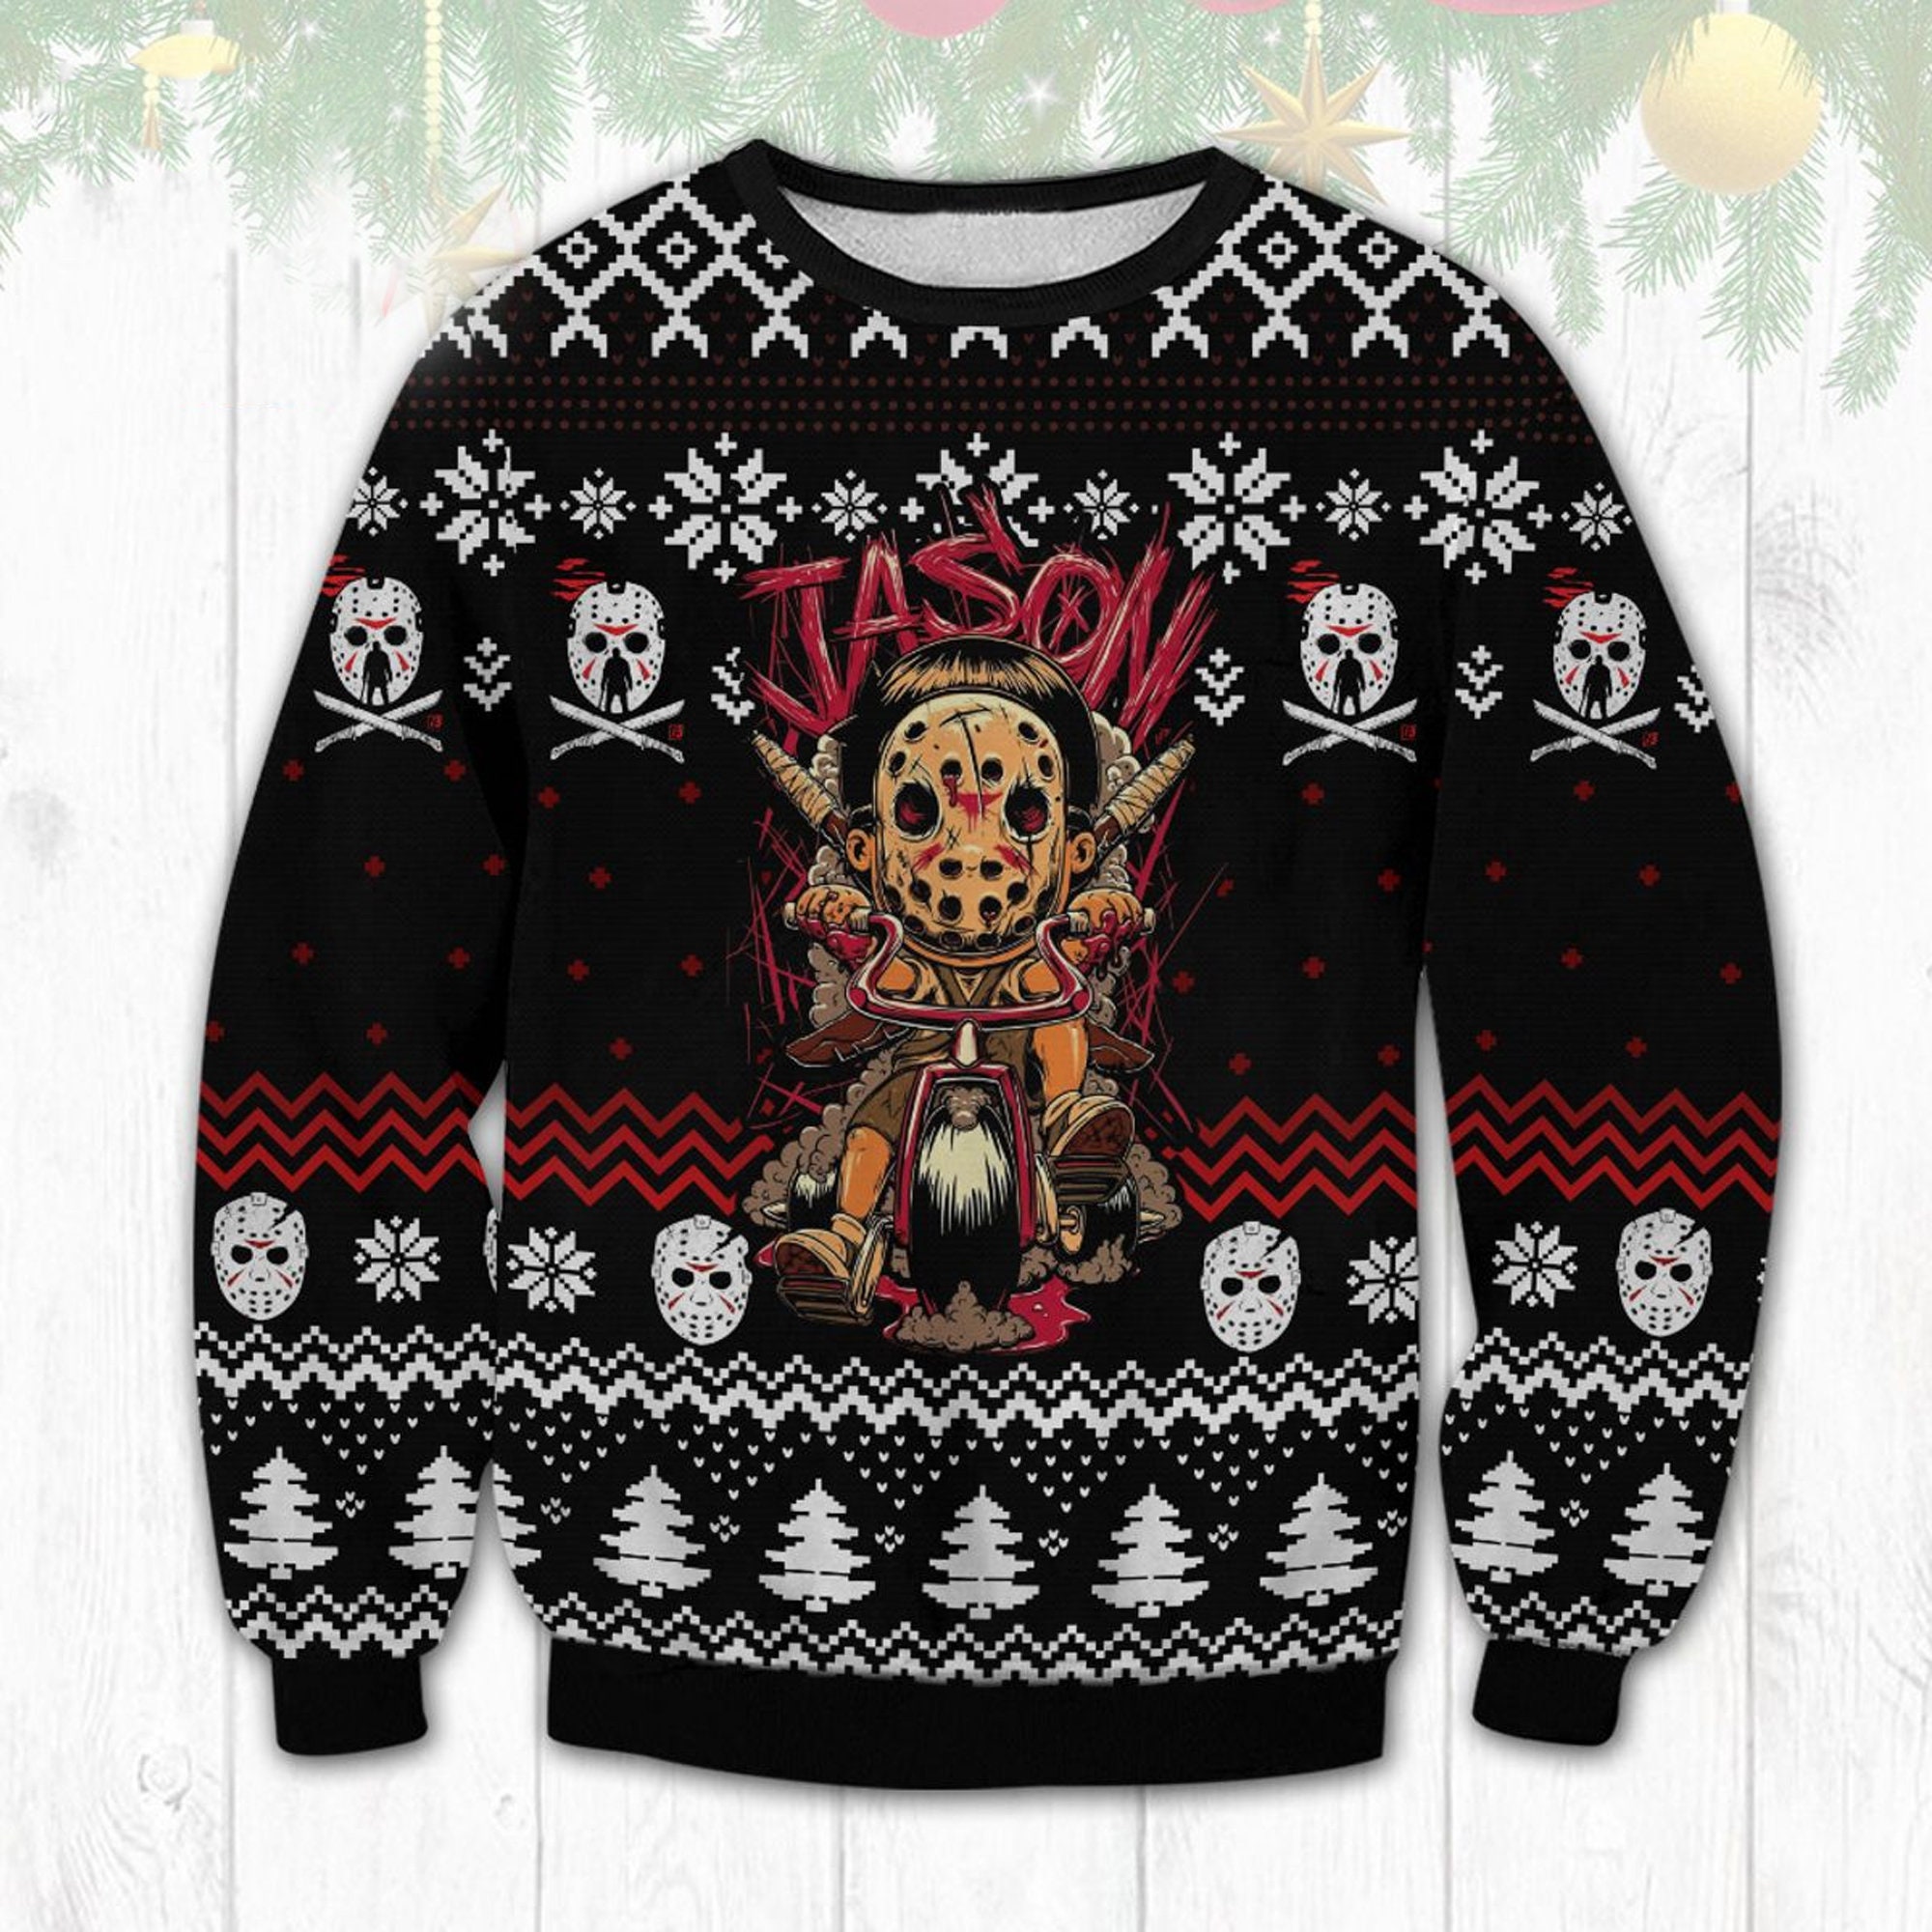 3D JASON VOORHEES Ugly Christmas Sweater, Horror Character Sweatshirt, Halloween Horror Movie Shirt, Horror Movie Gift, Scary Halloween